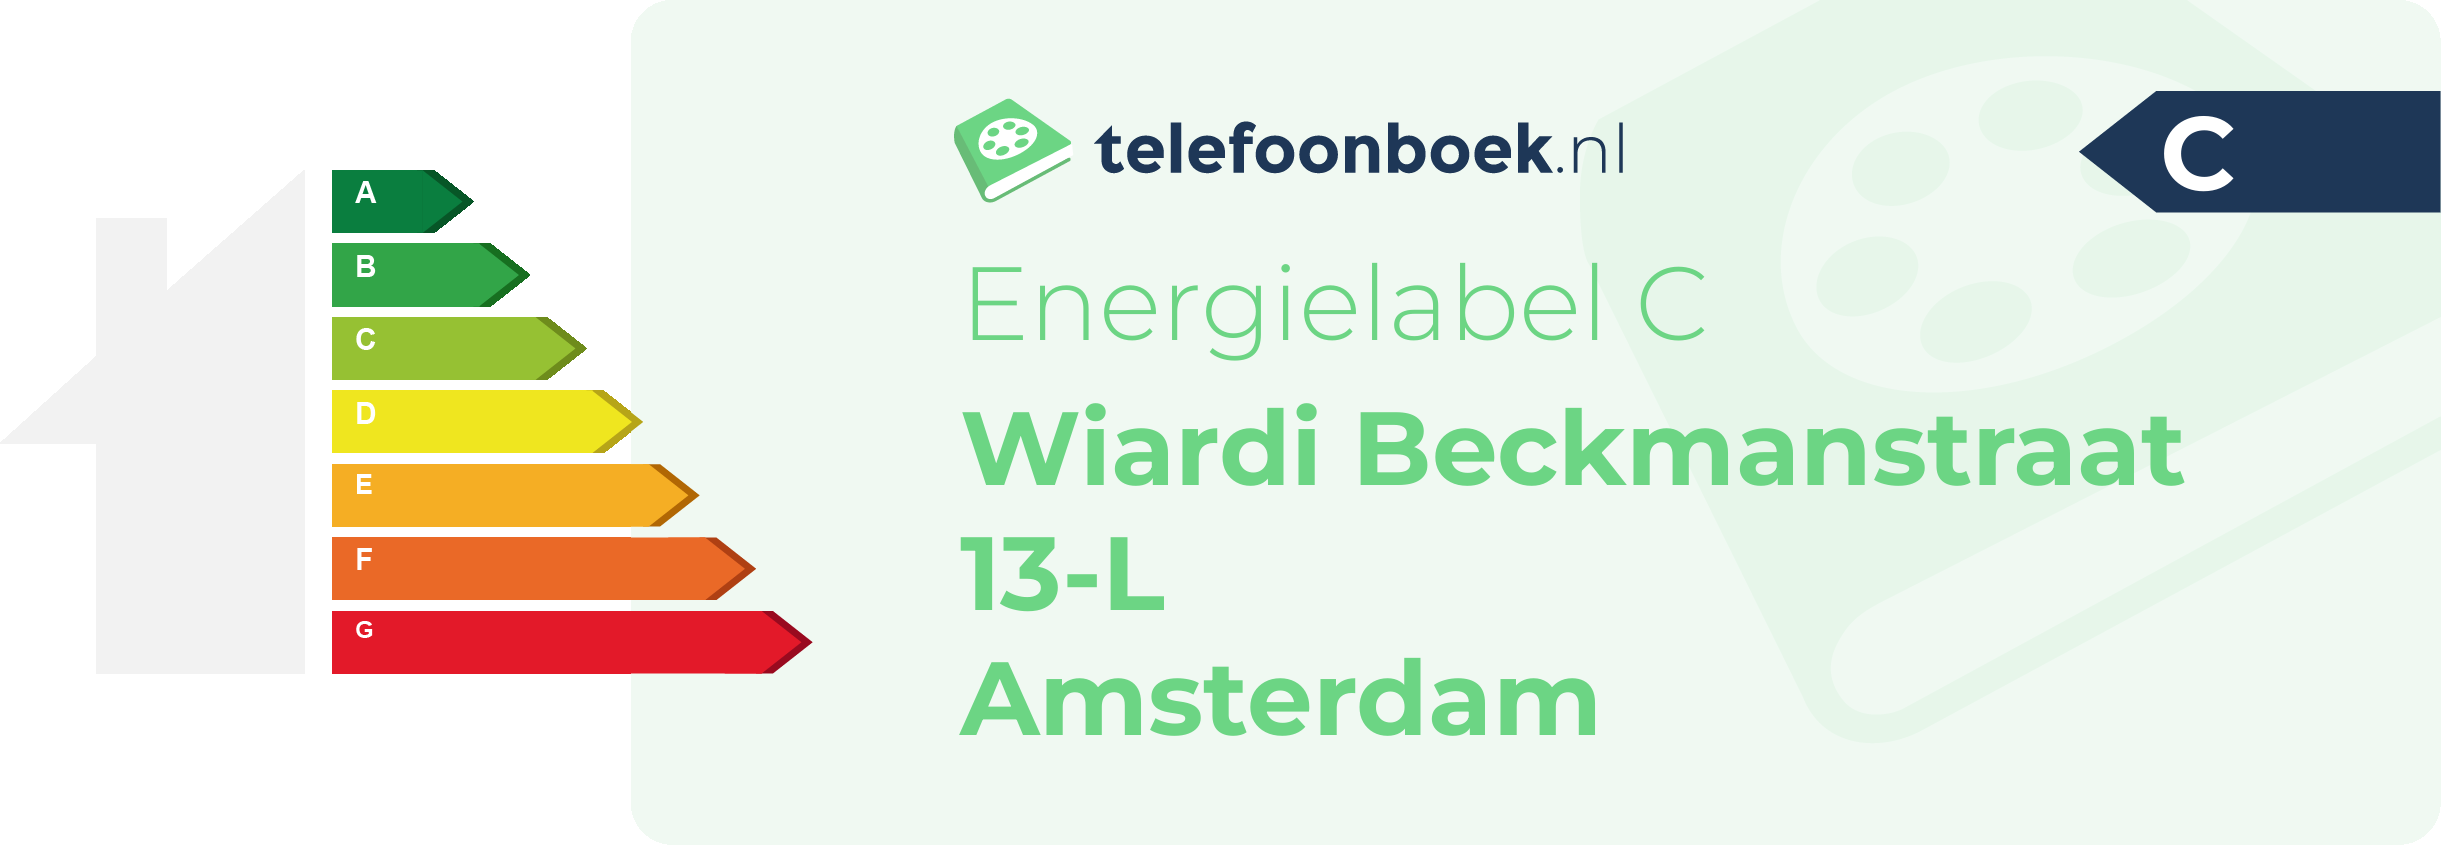 Energielabel Wiardi Beckmanstraat 13-L Amsterdam